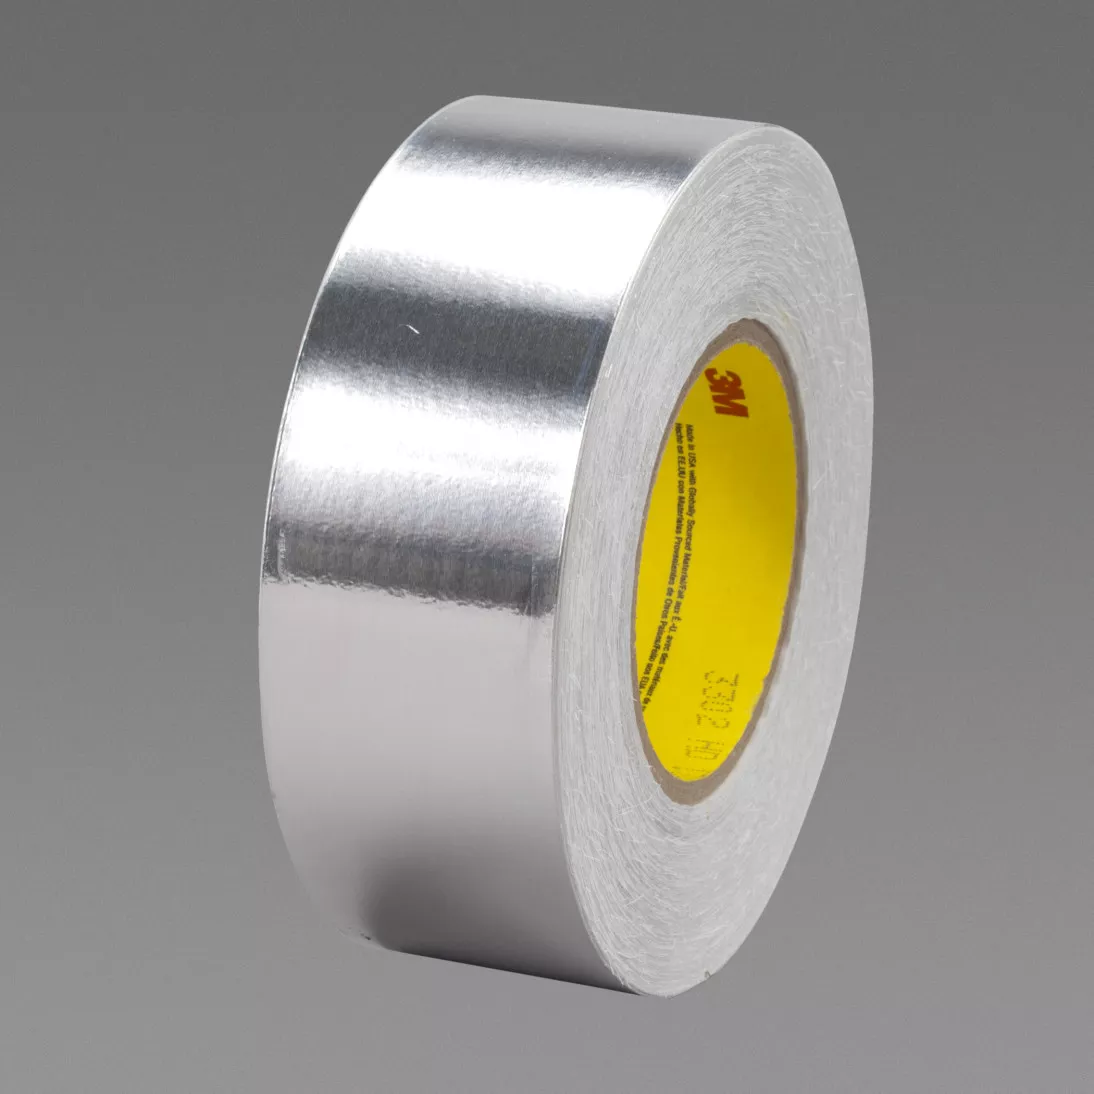 3M™ Conductive Aluminum Foil Tape 3302, Silver, 8 in x 36 yd, 3.5 mil, 1
roll per case, Plastic Core